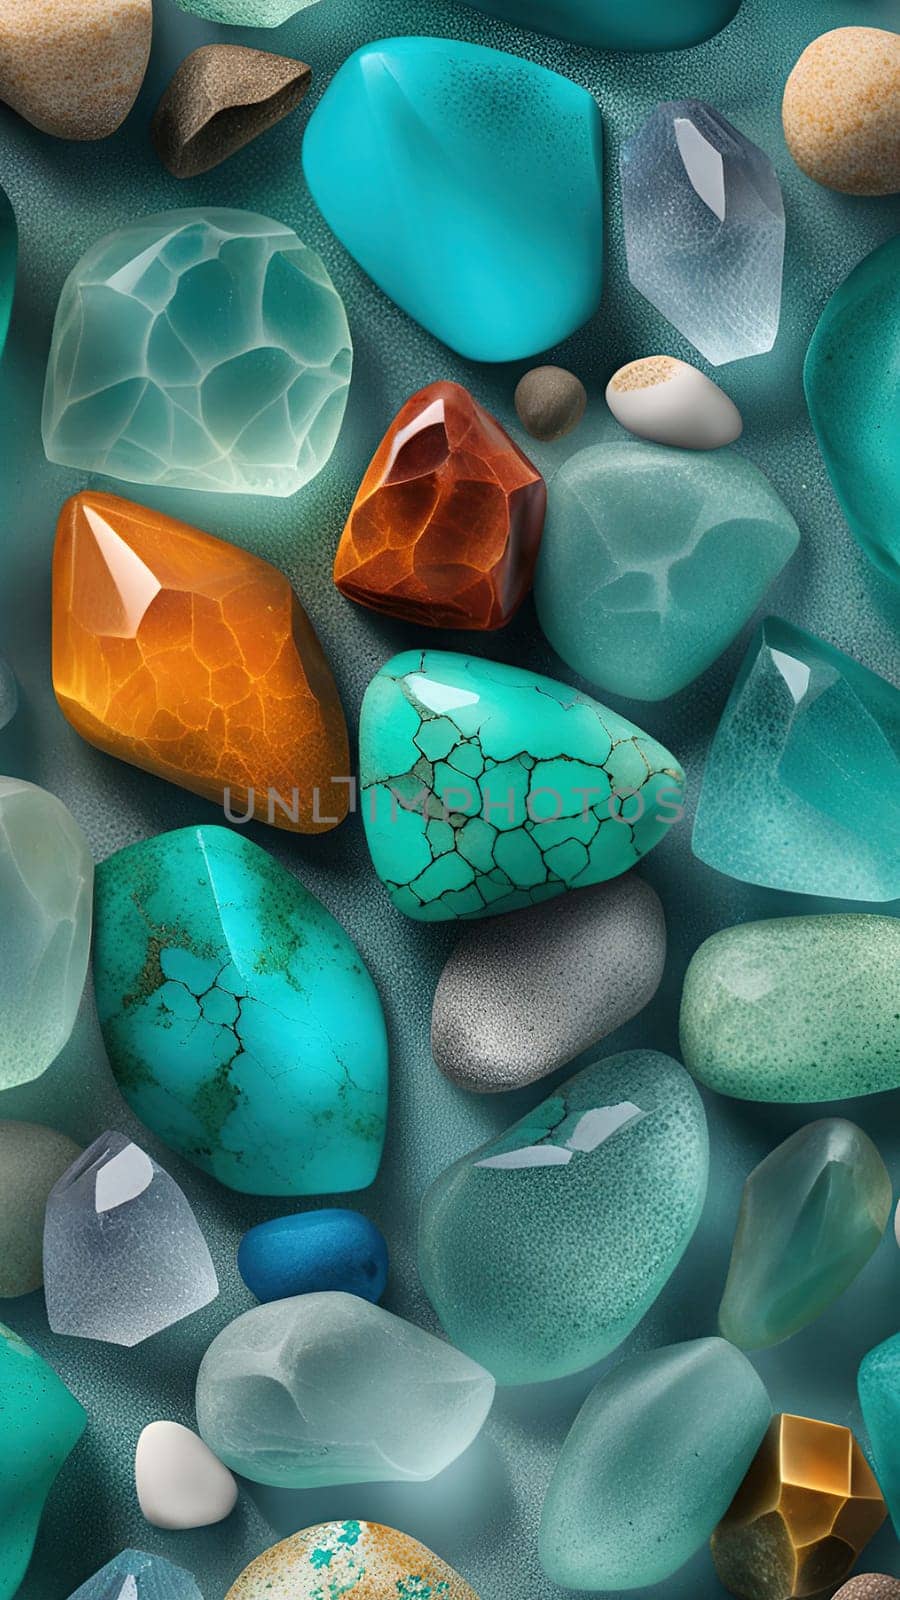 Colorful stones background, 3d rendering. Computer digital drawing by yilmazsavaskandag